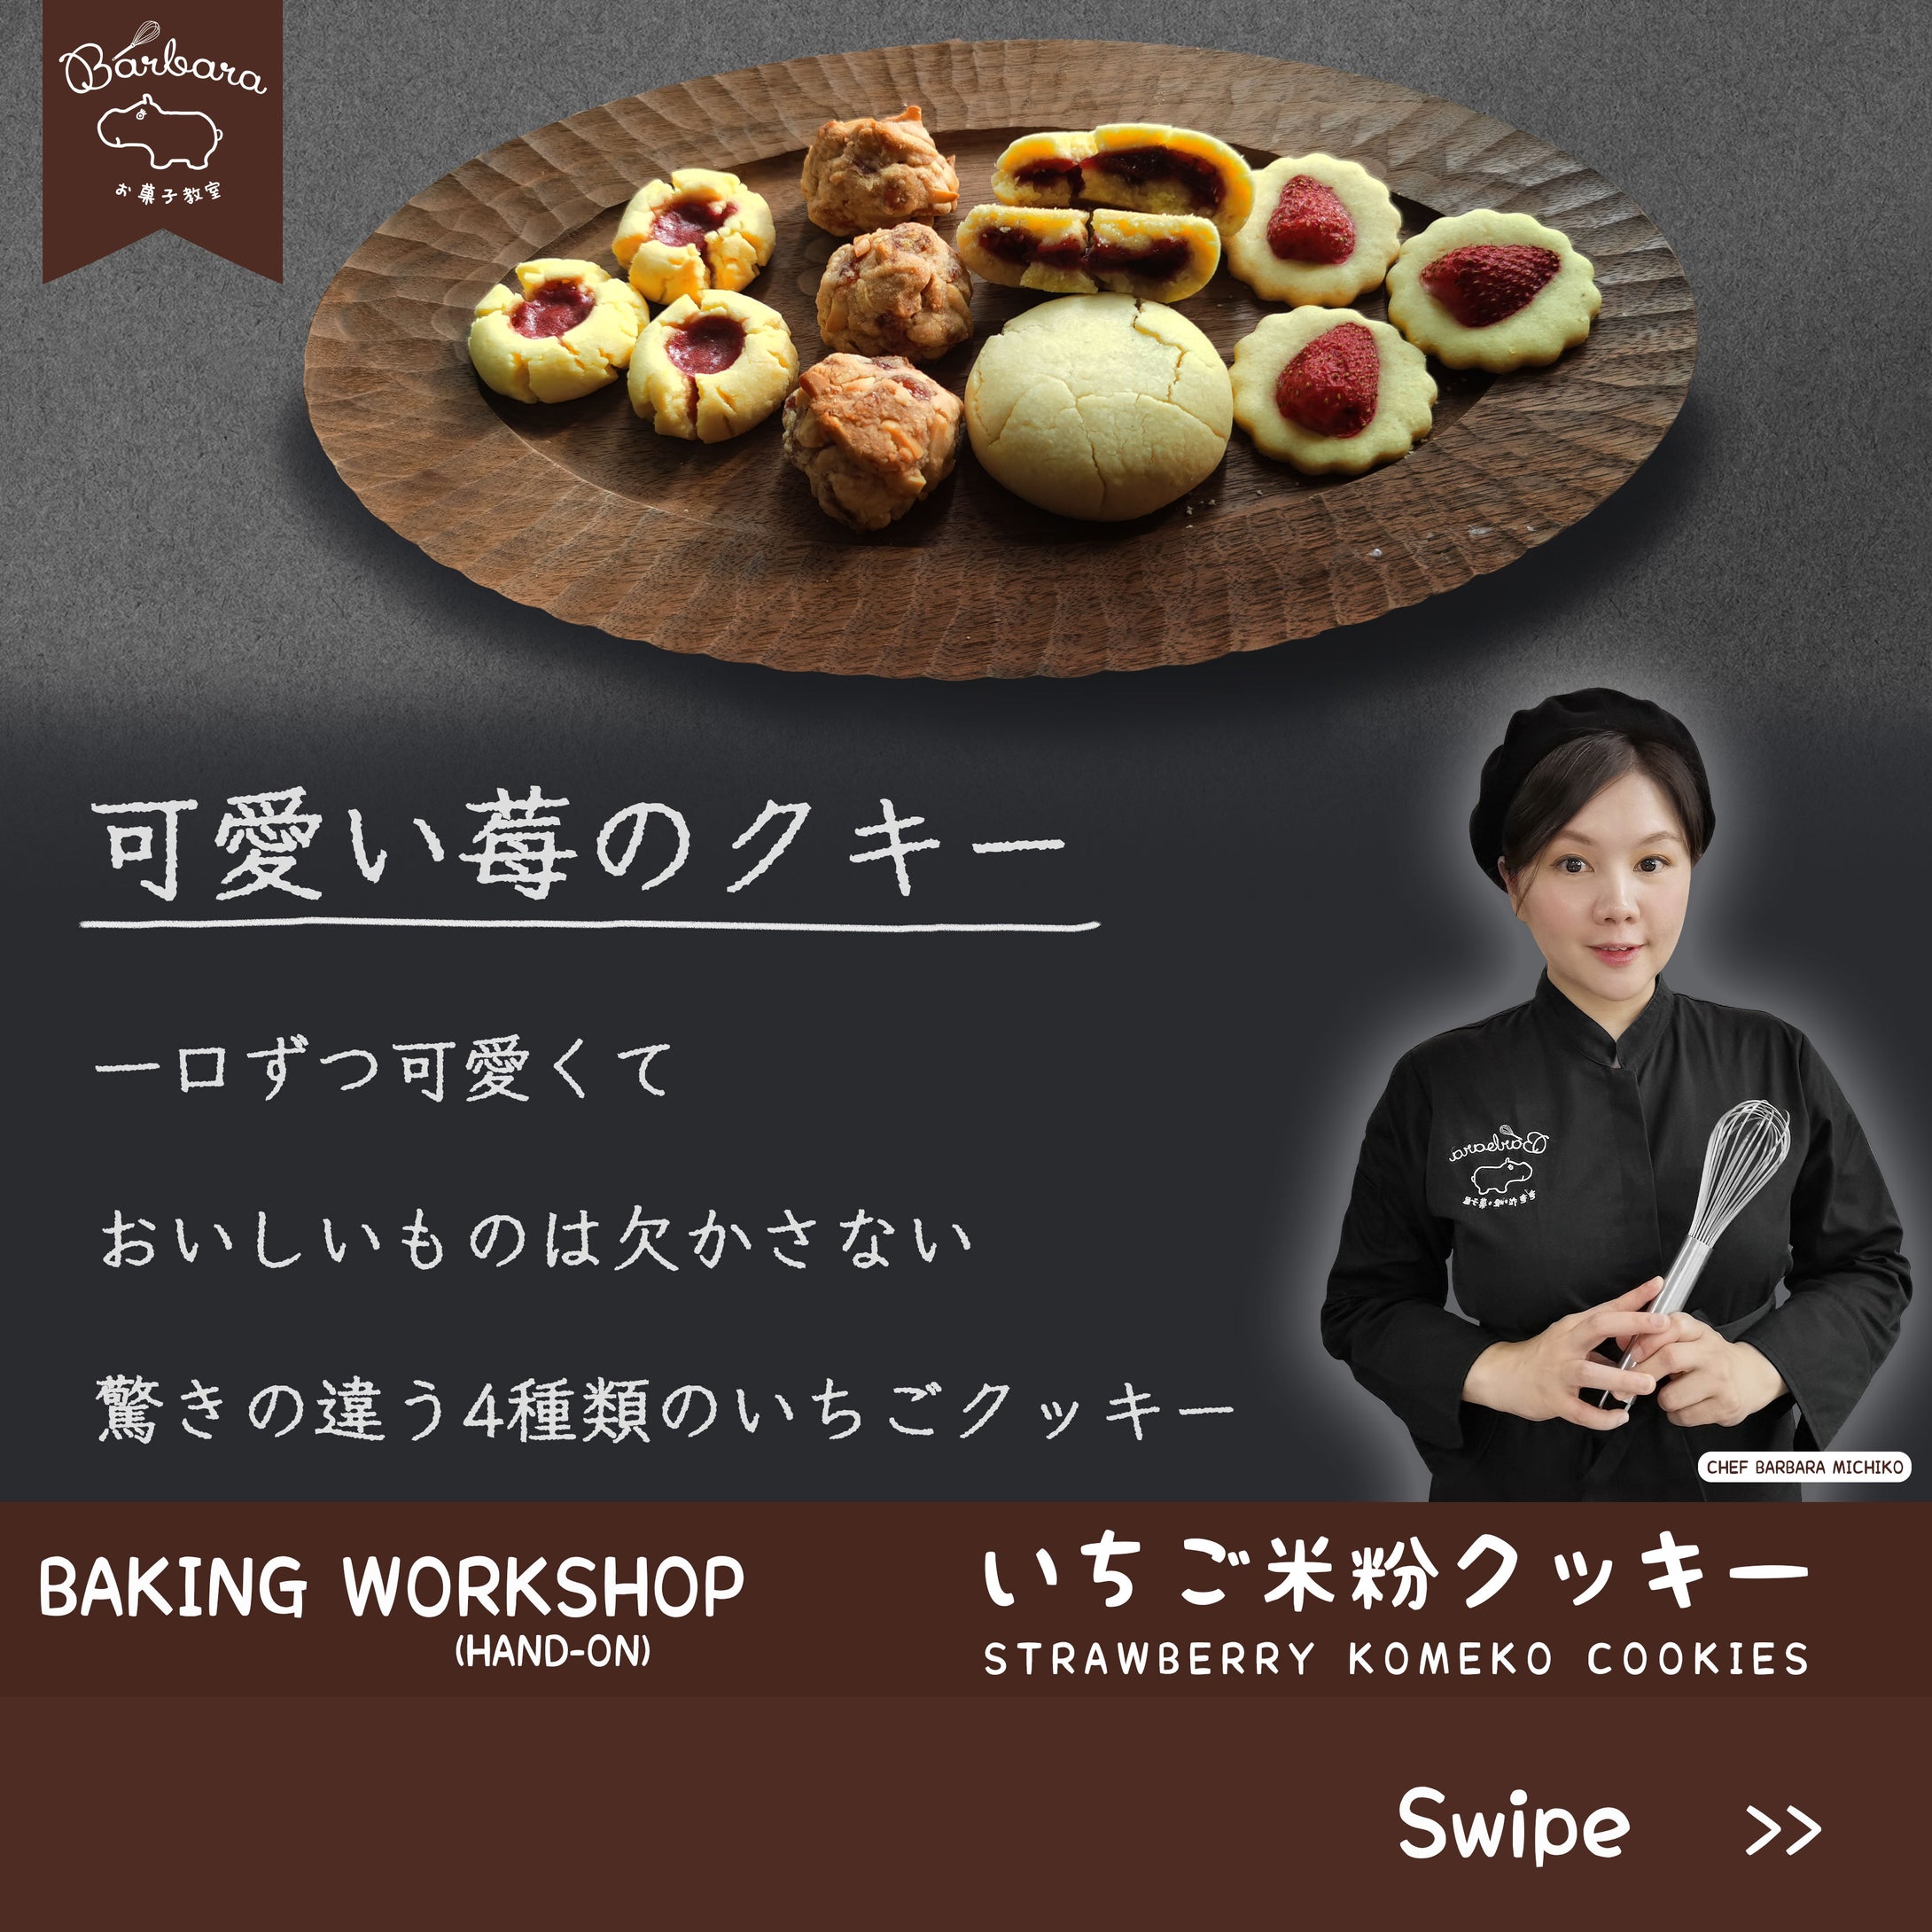 🍓 【日式杂锦草莓曲奇】🍓
Assorted Strawberry Komeko Cookies Workshop